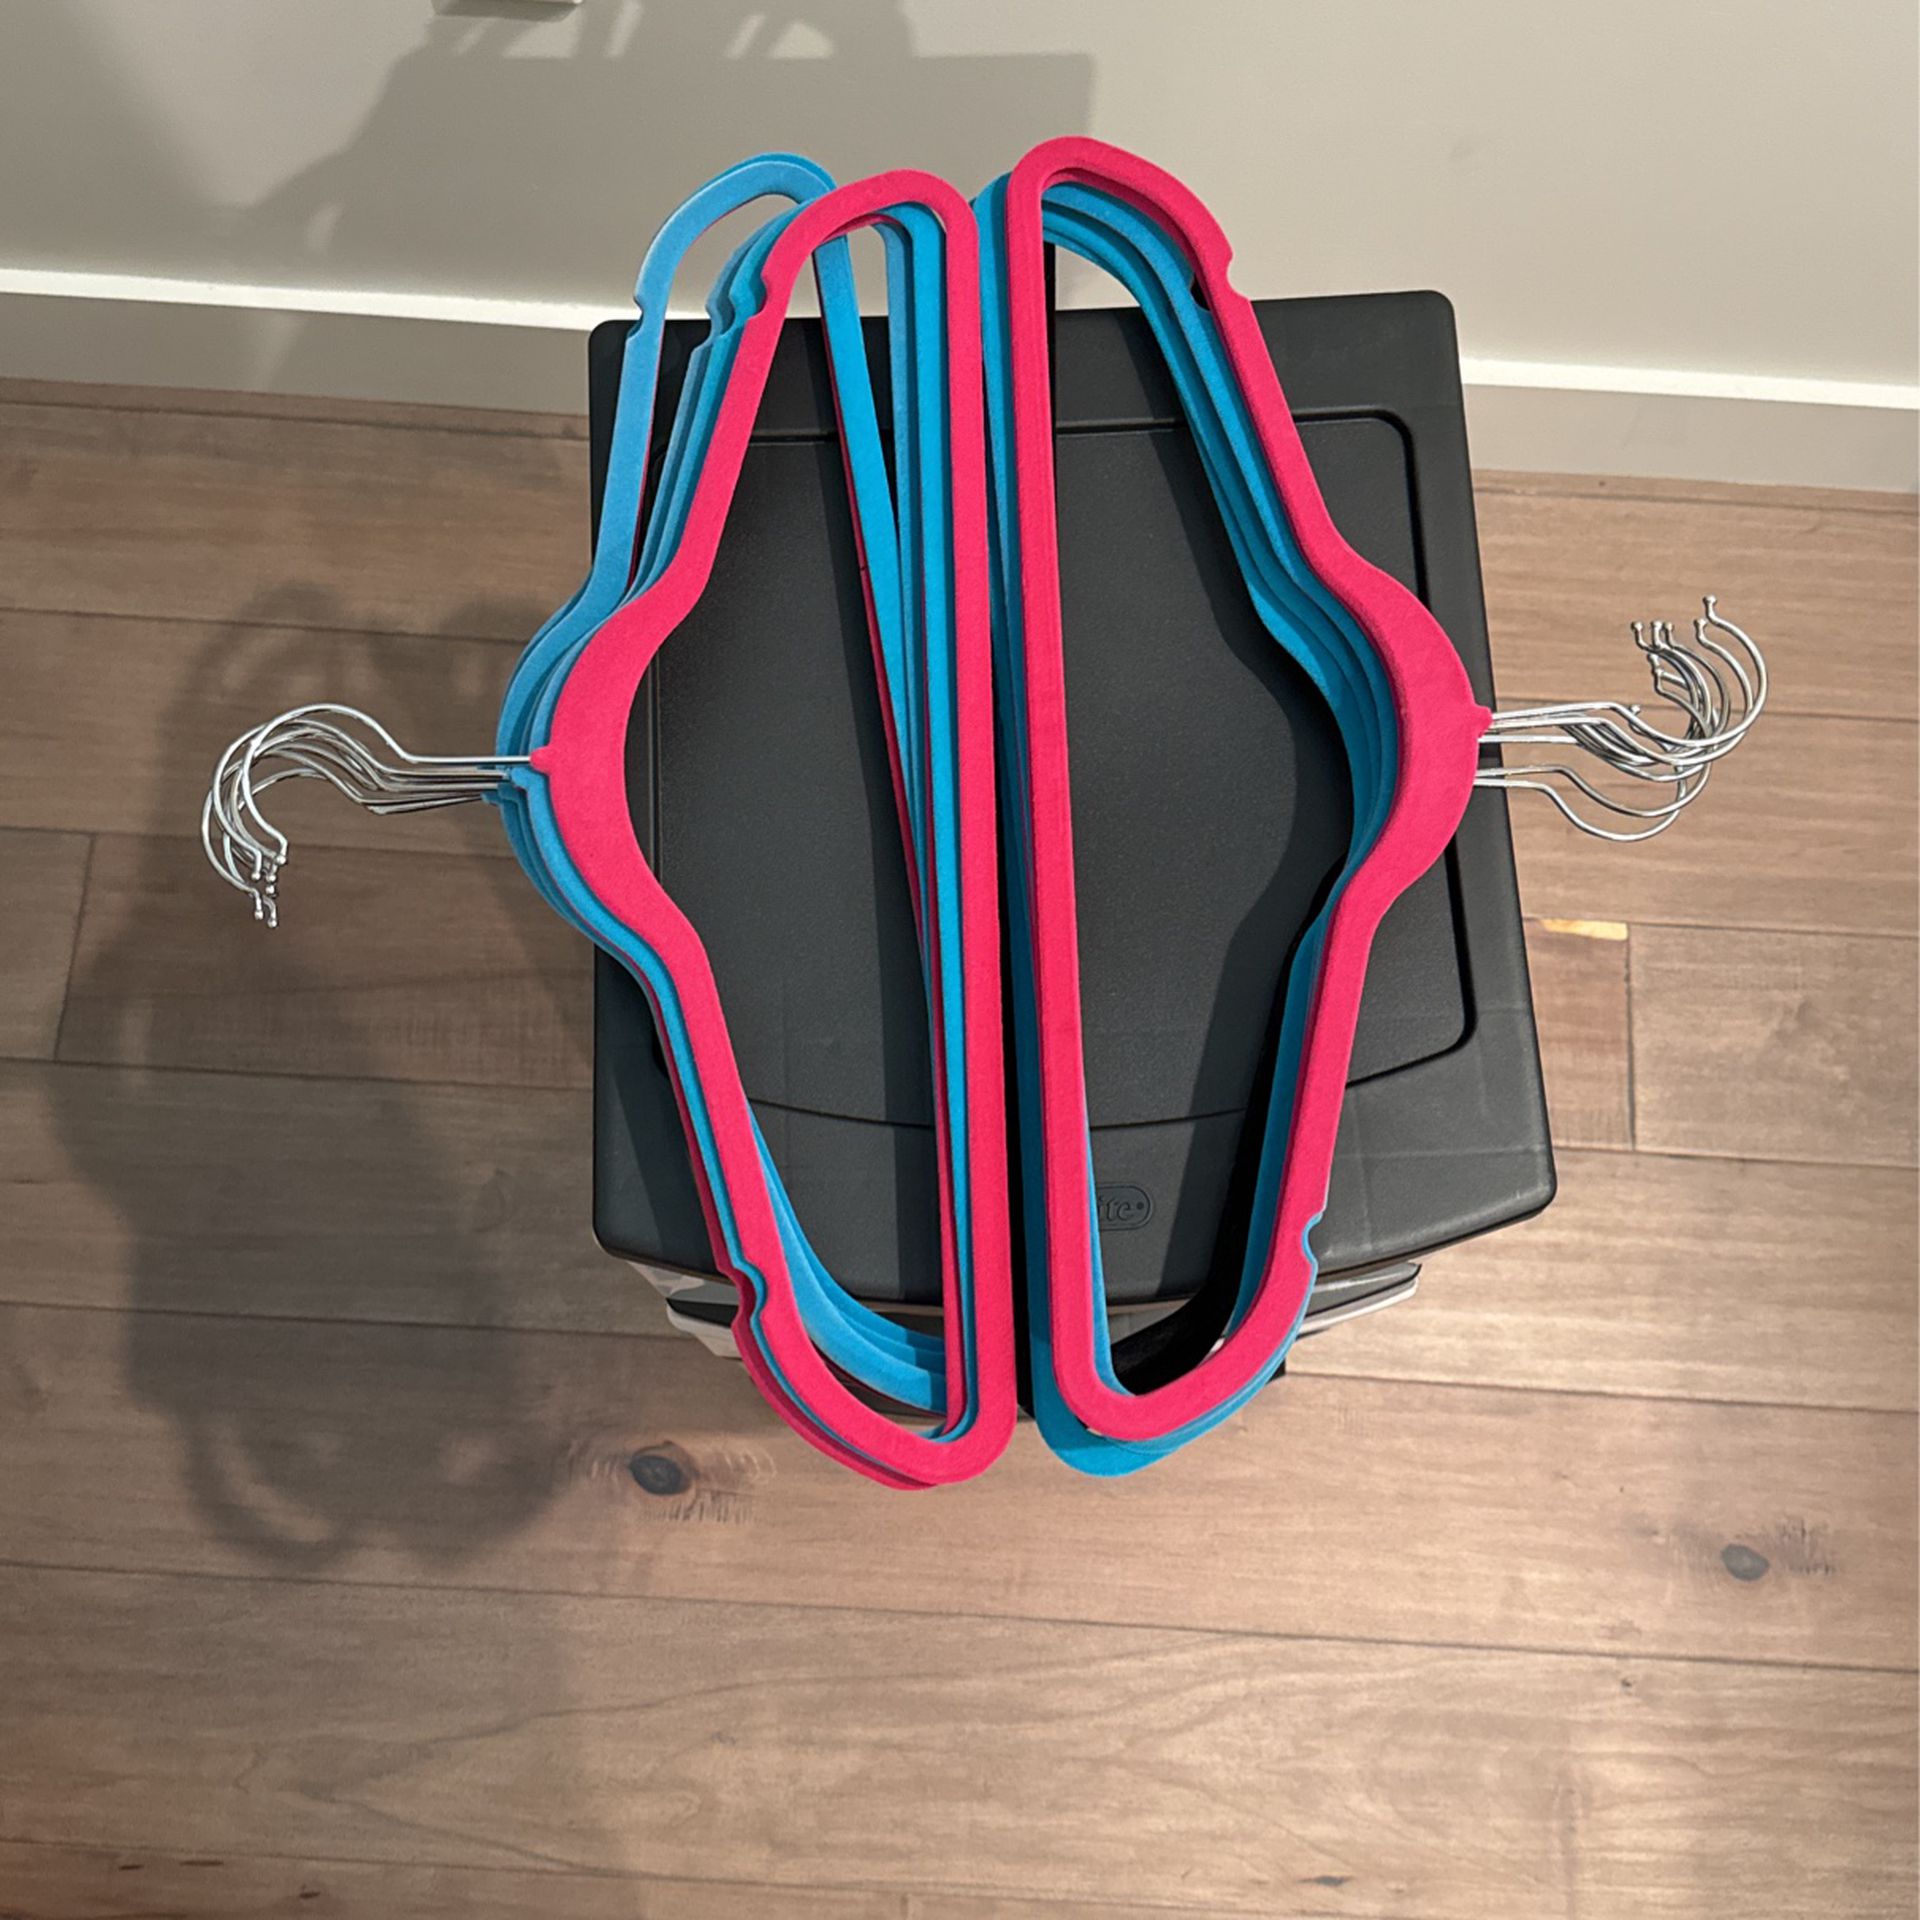 50 Hangers (pink/blue/black)